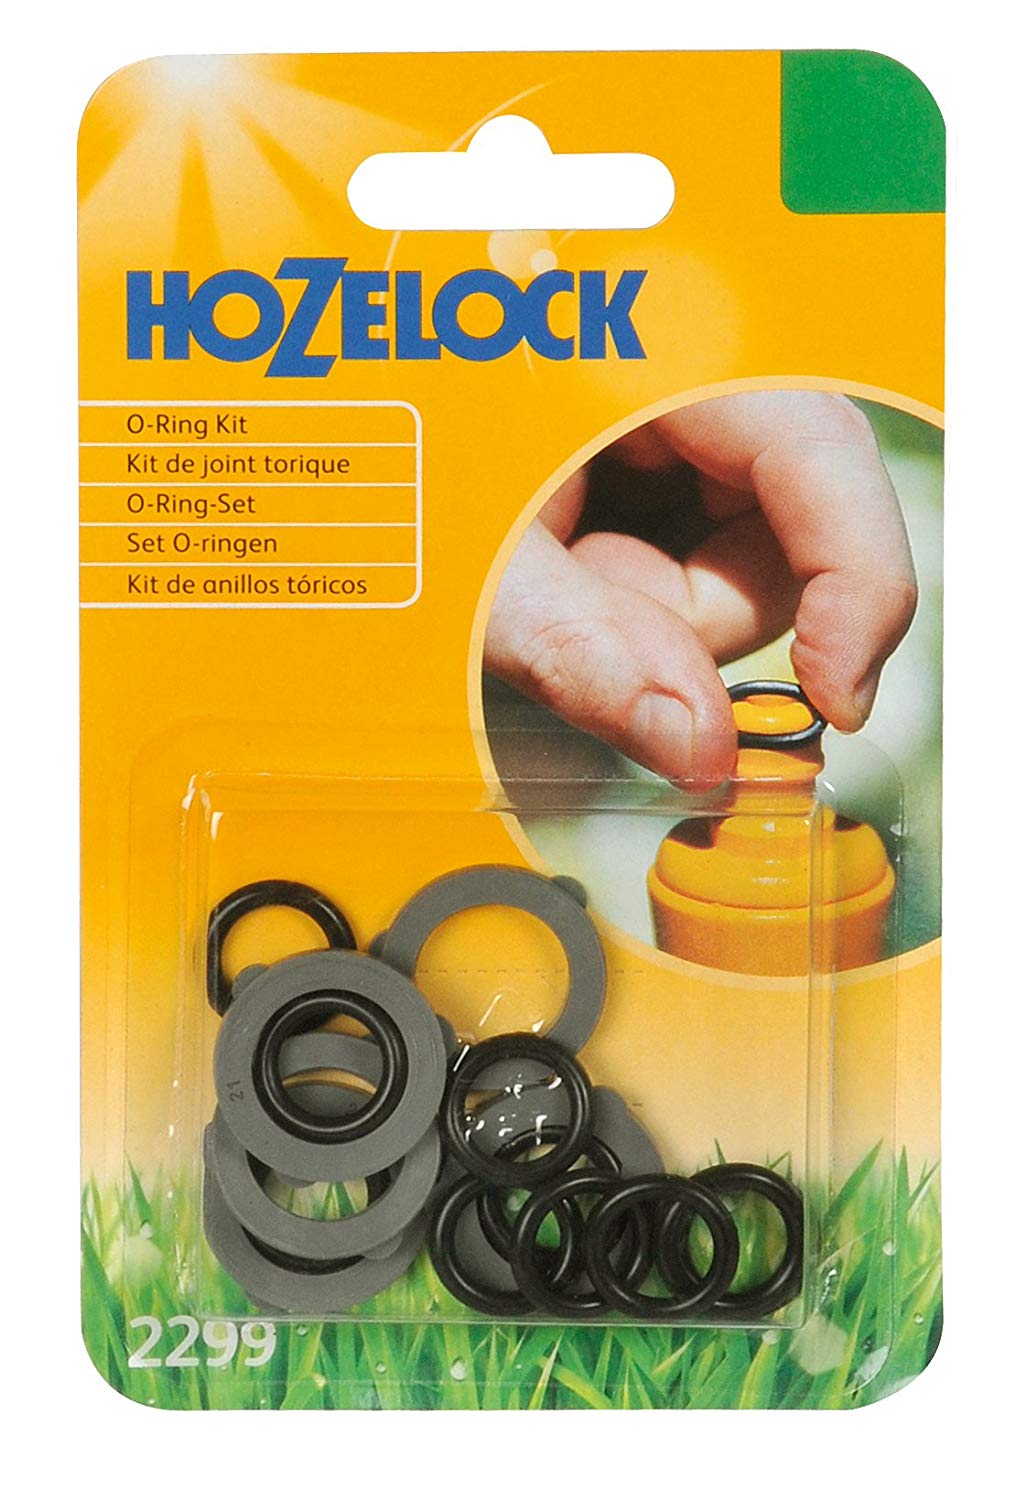 Hozelock Spares Kit (2299)